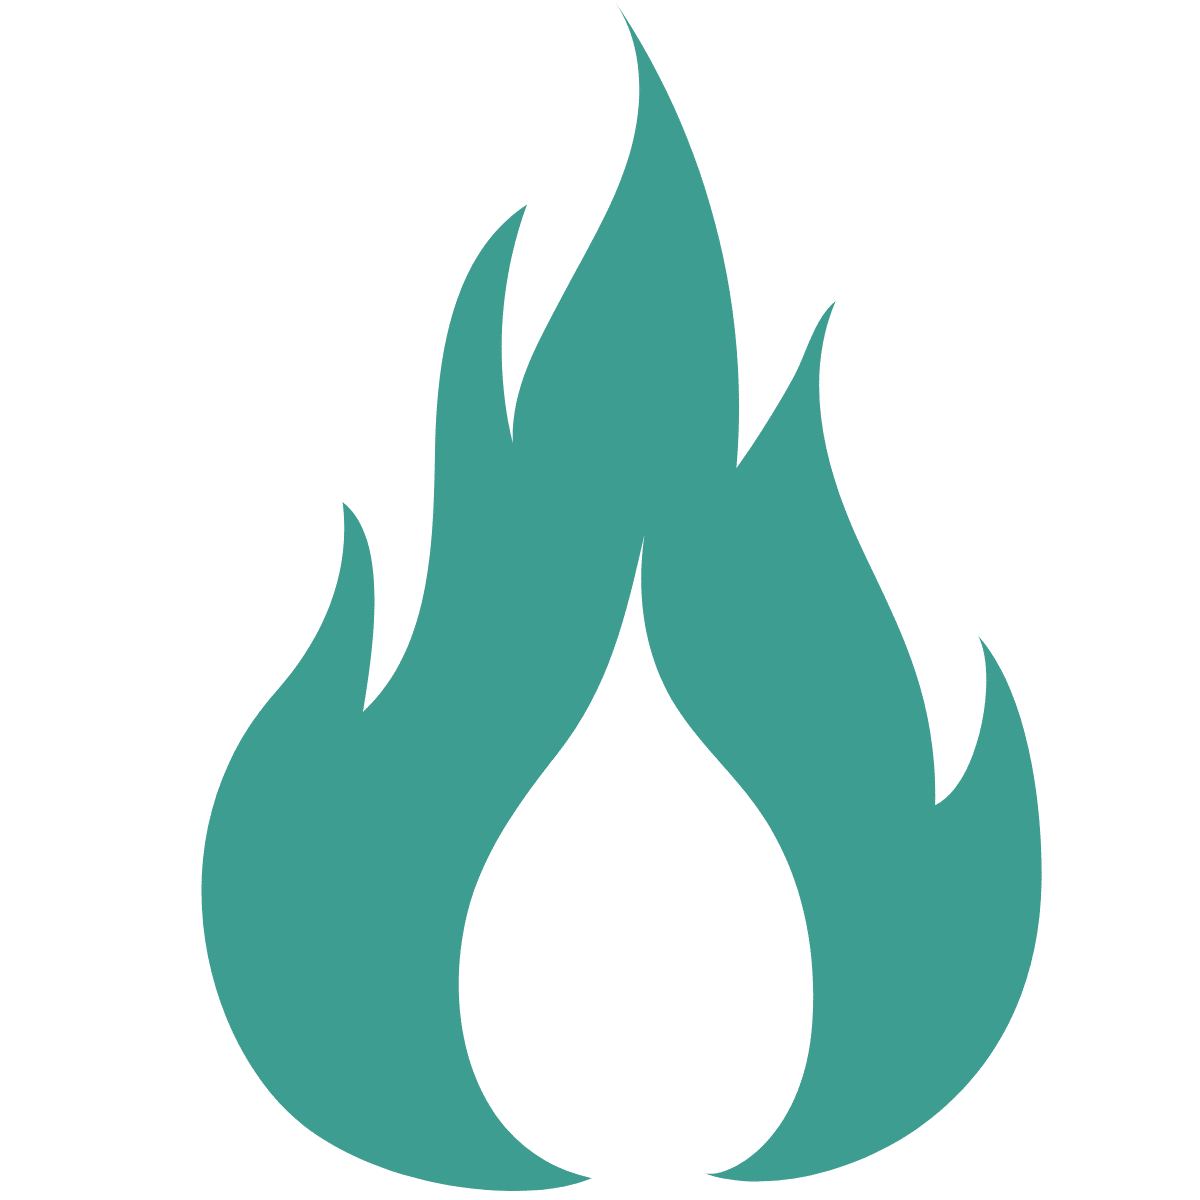 fire insurance claim